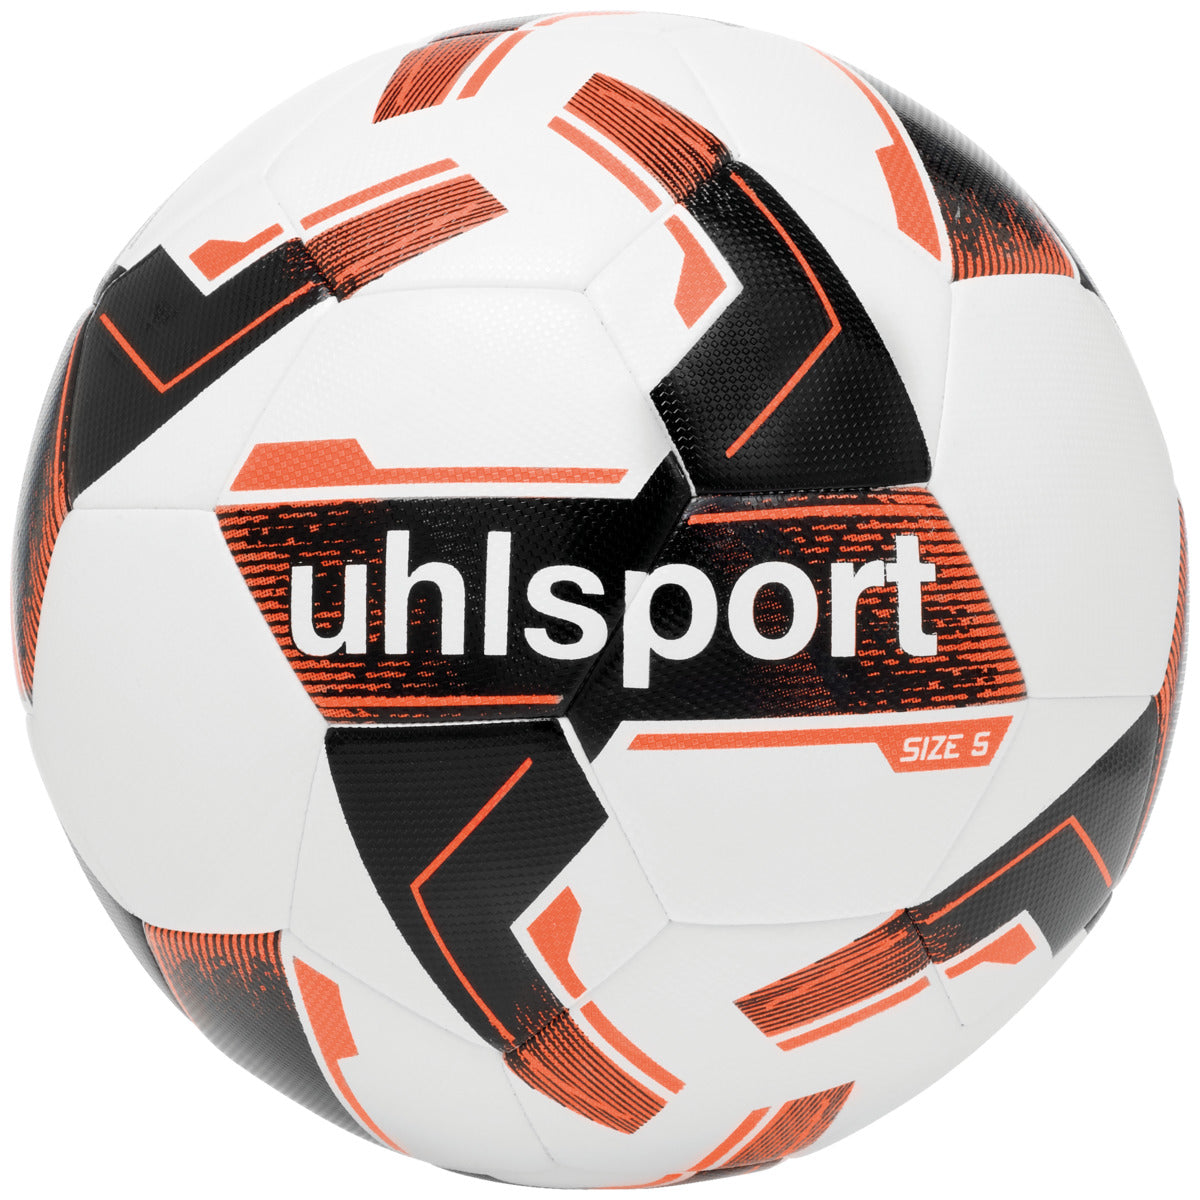 Uhlsport Resist Synergy - White/Black/Fluo Orange